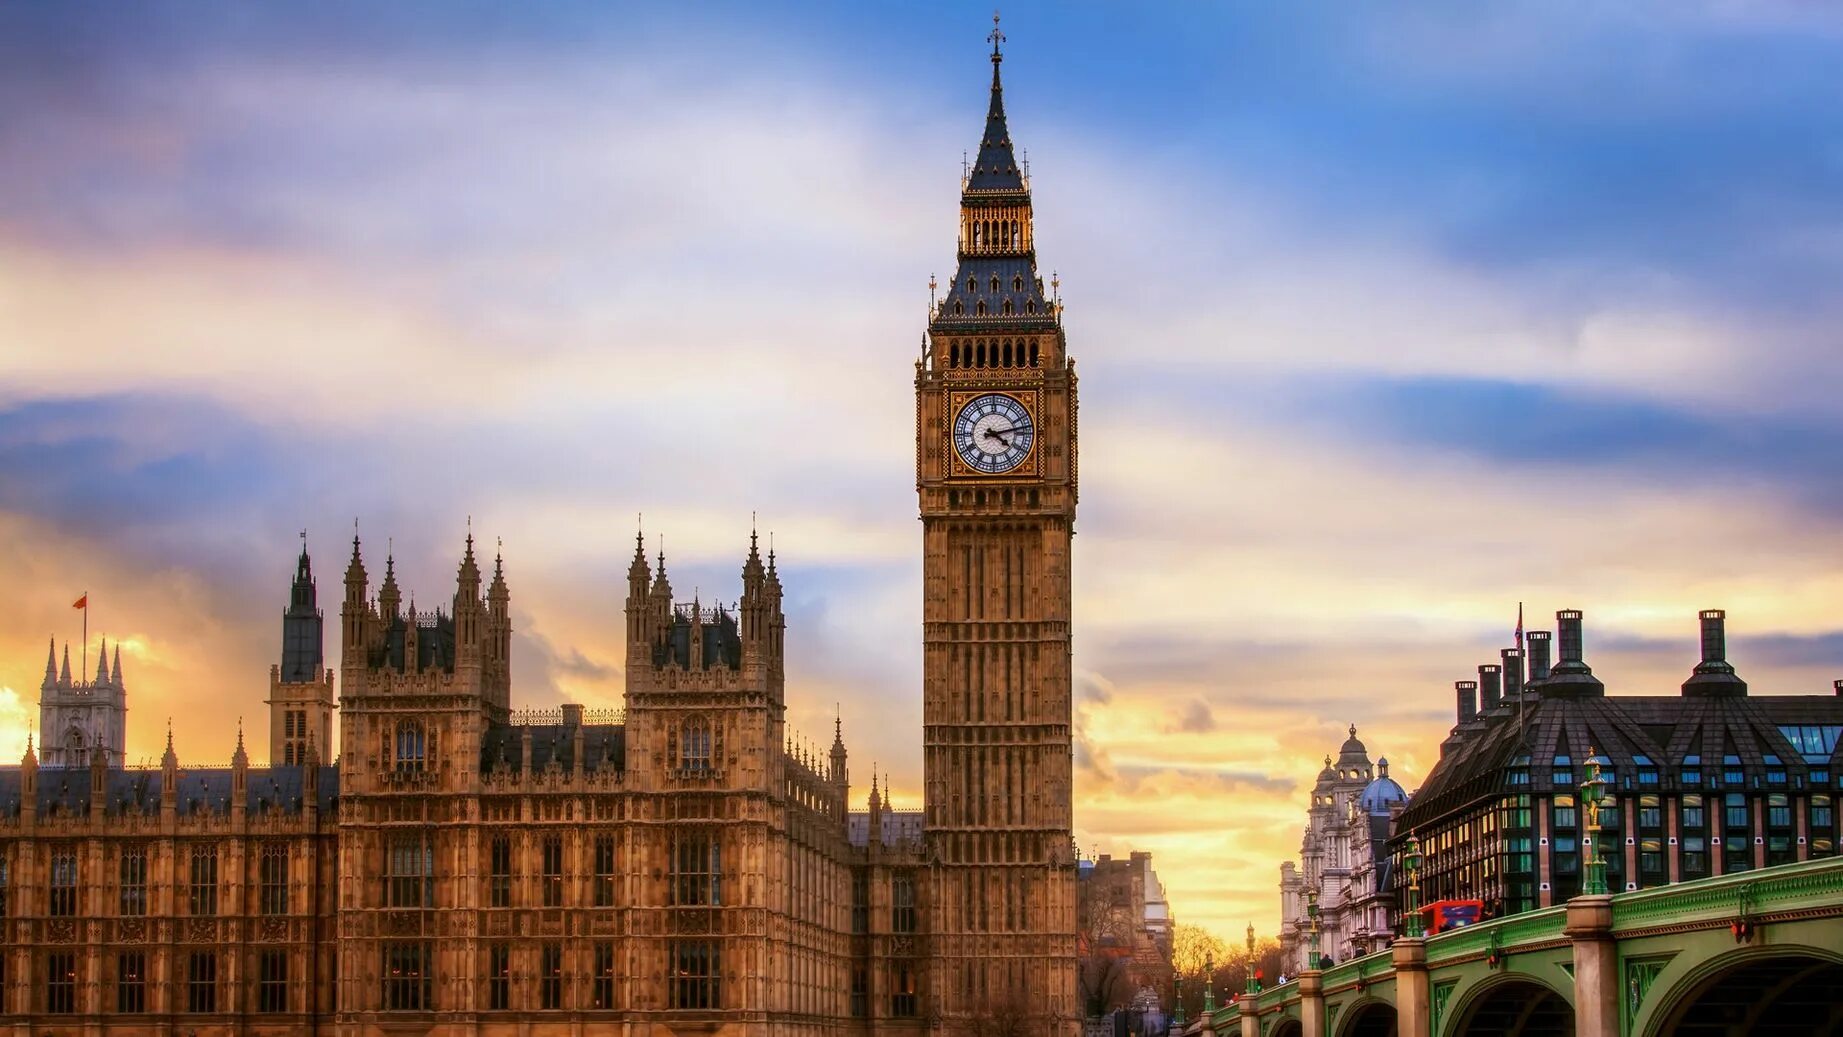 Watching britain. Башня Биг Бен в Лондоне. Часовая башня Биг Бен. Биг-Бен (башня Елизаветы). Часовая башня Вестминстерского дворца.